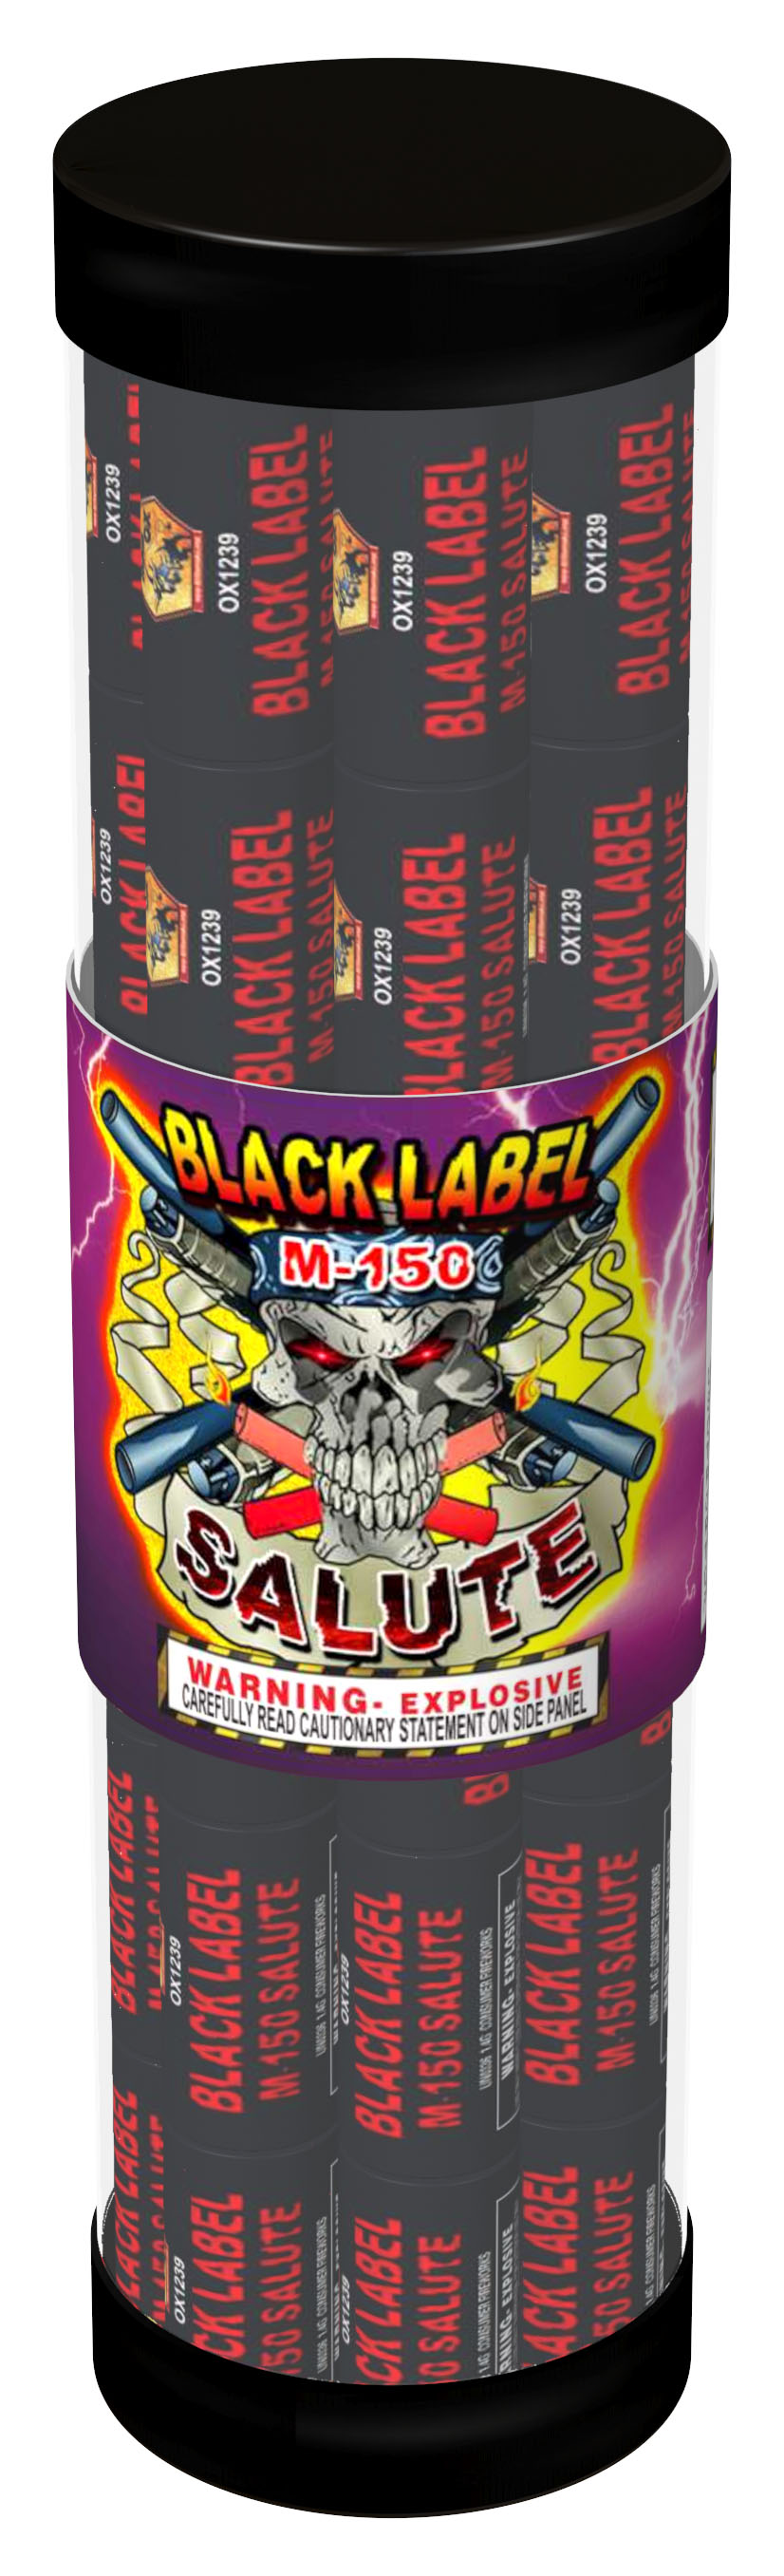 Black Label M-150 Firecrackers